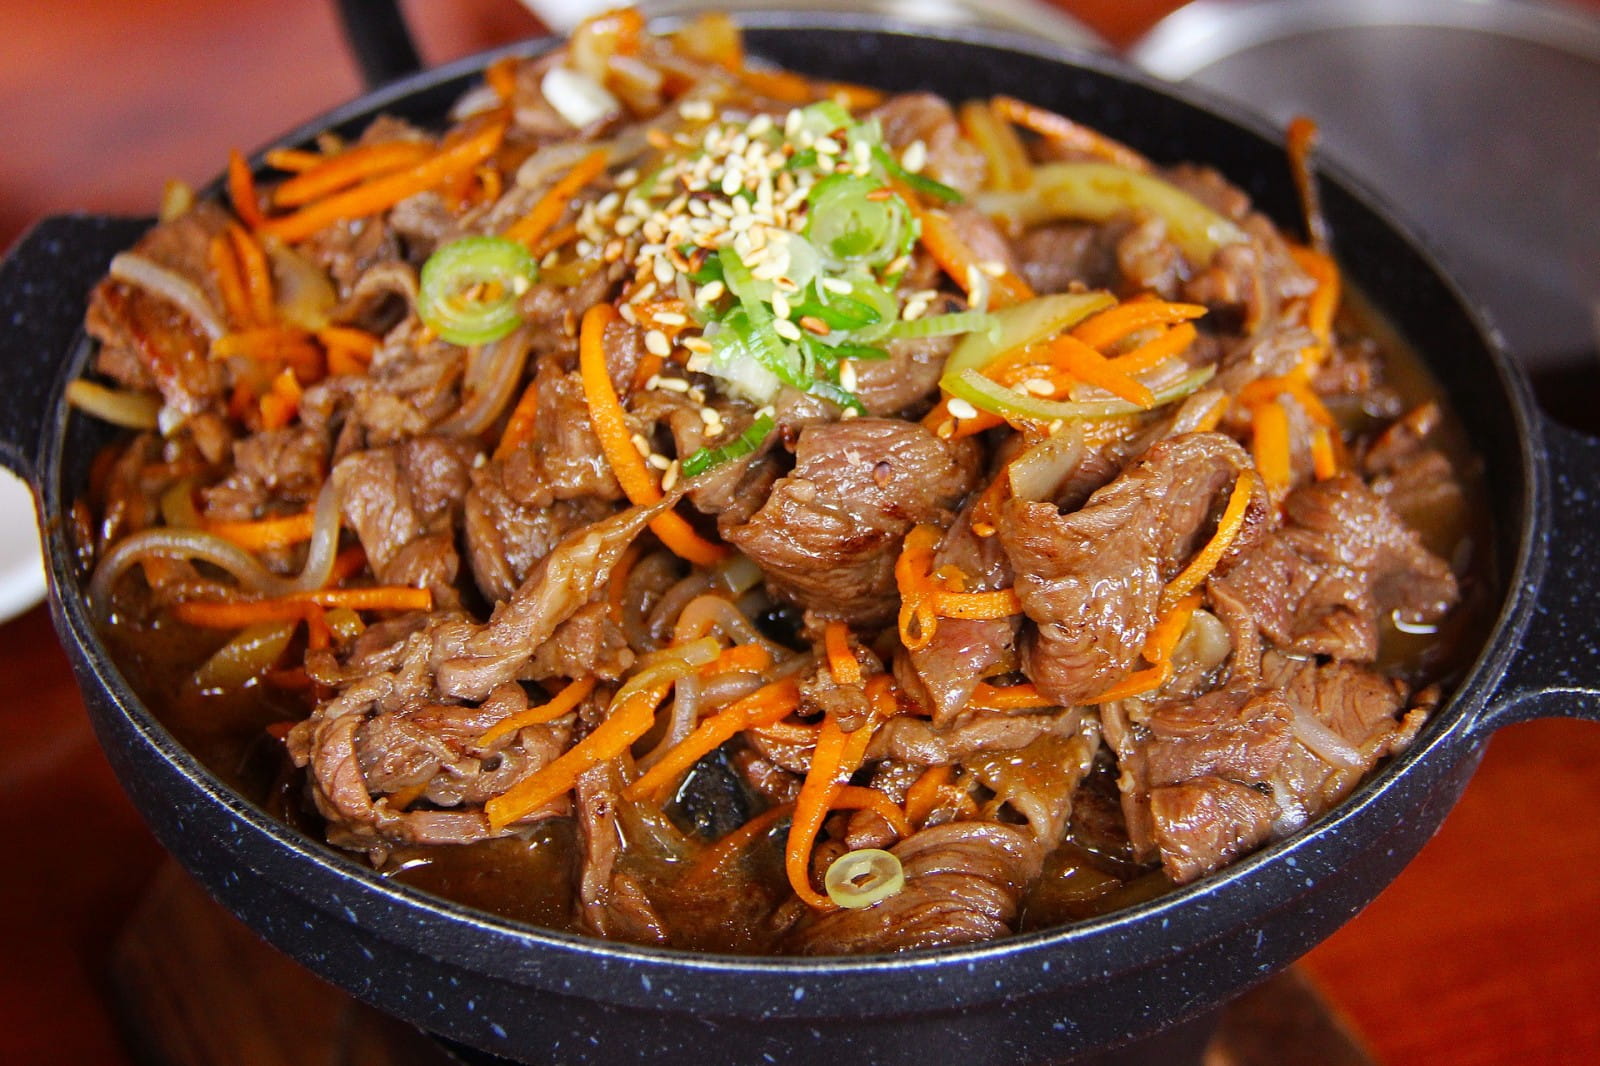 What makes Korean food distinctive